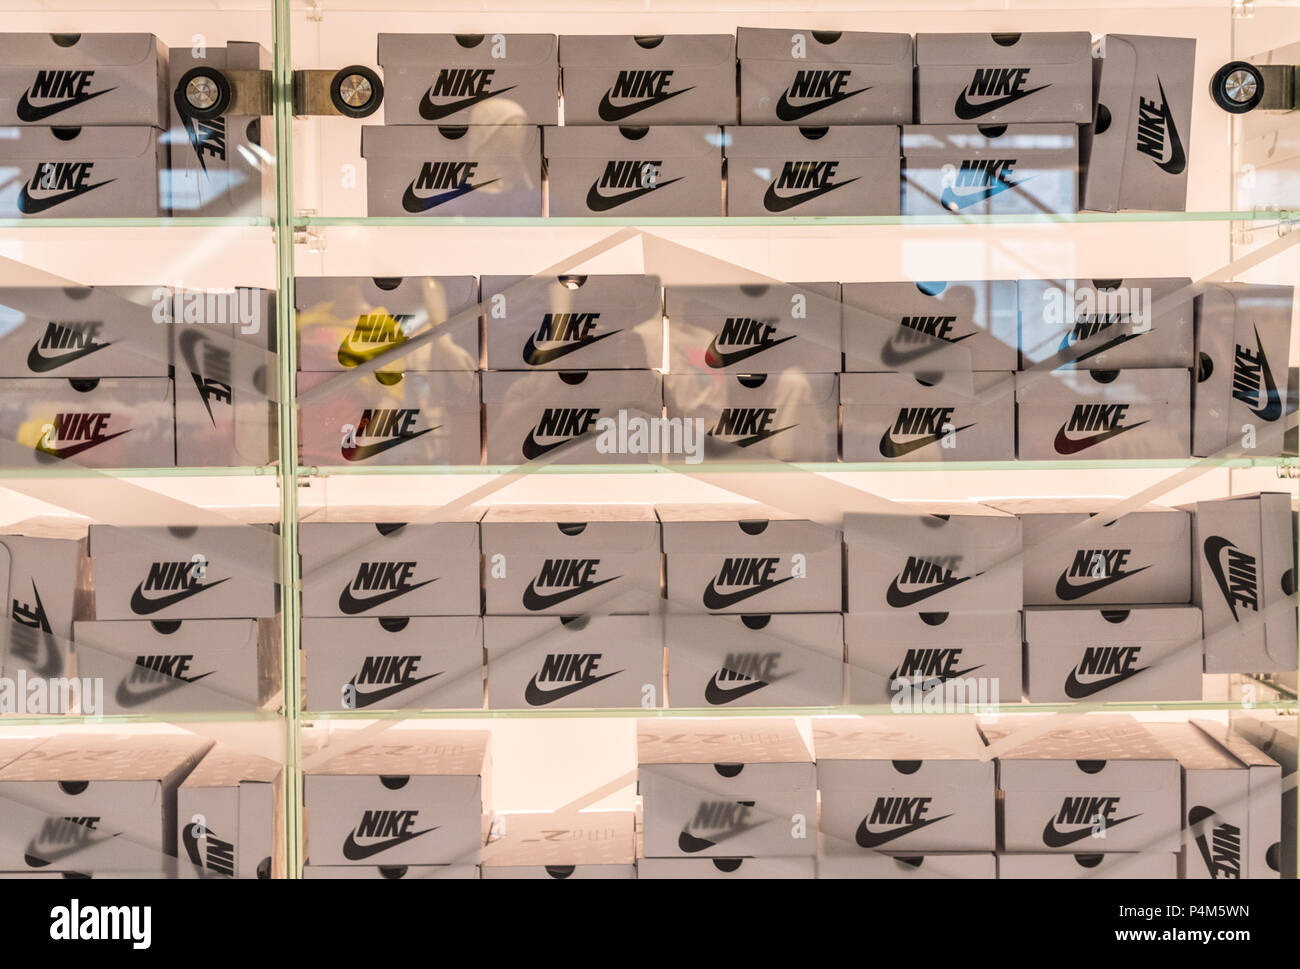 Nike boxes -Fotos und -Bildmaterial in hoher Auflösung – Alamy